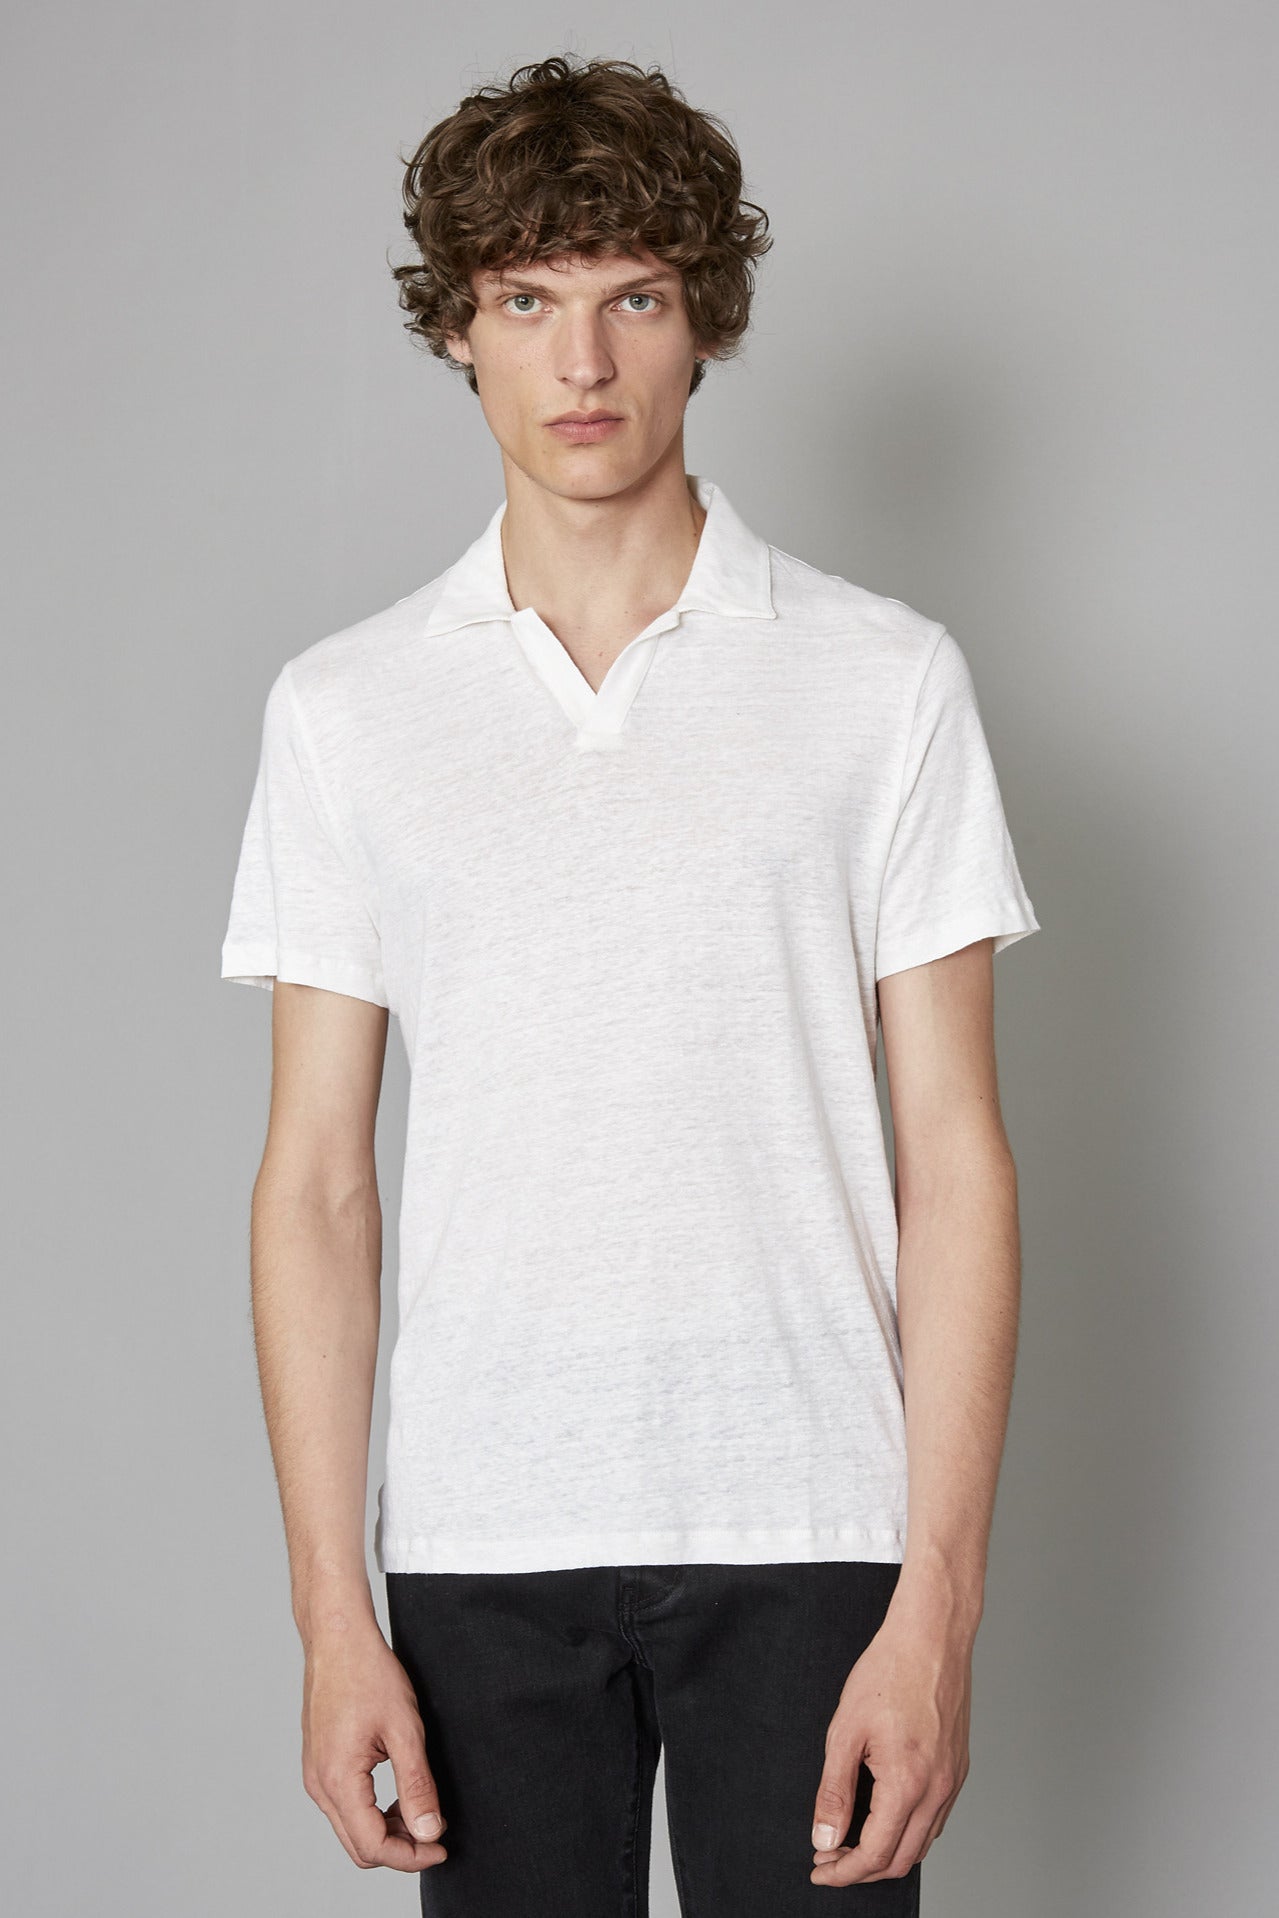 Polo shirt in white